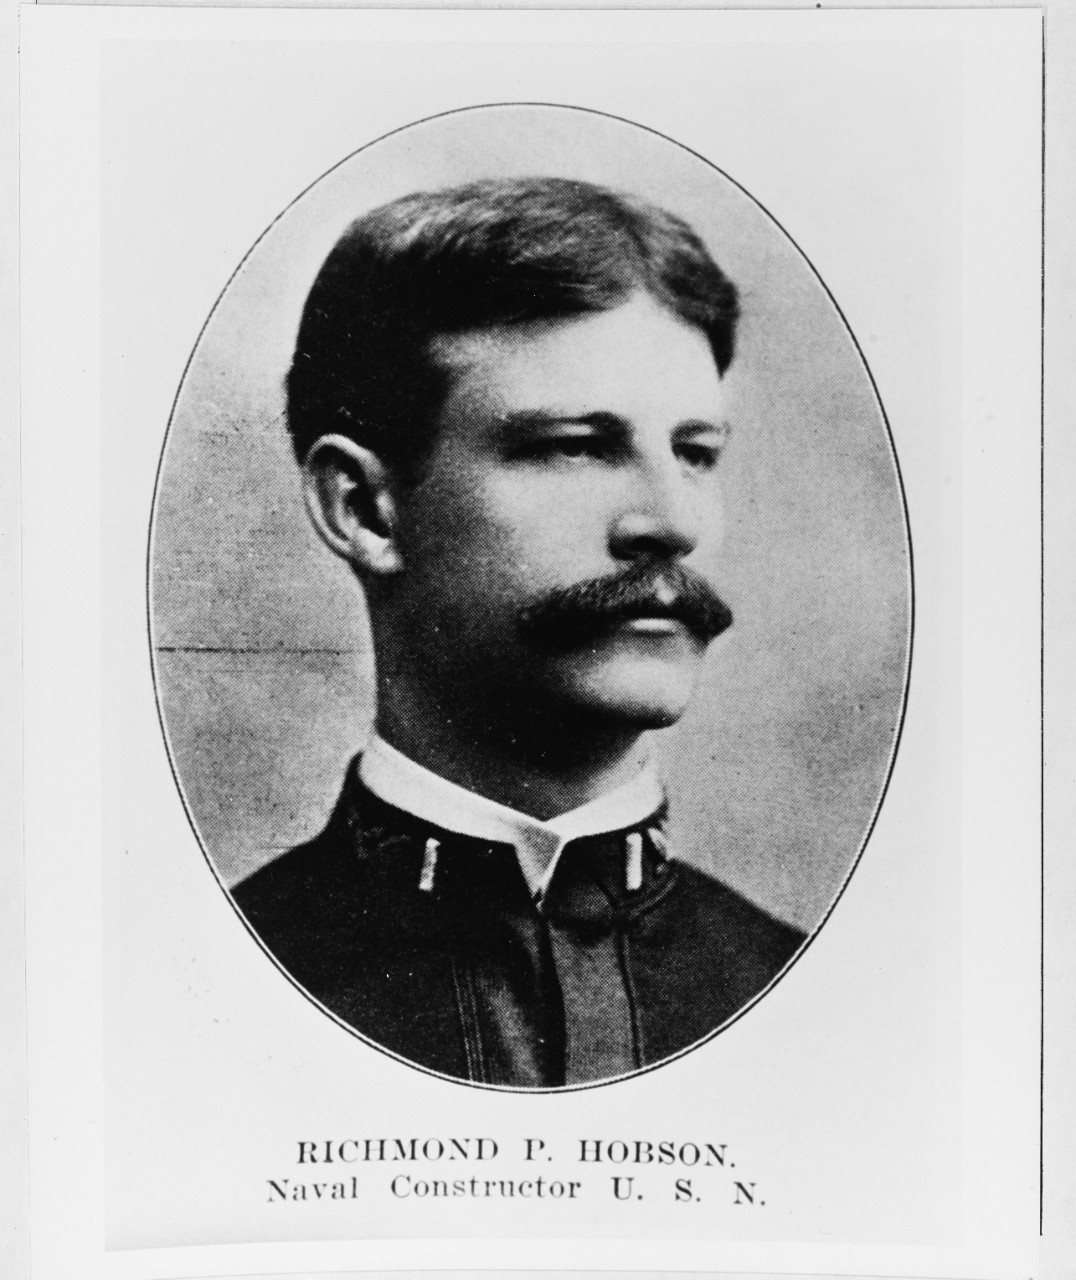 Rear Admiral Richmond P. Hobson, Construction Corps.